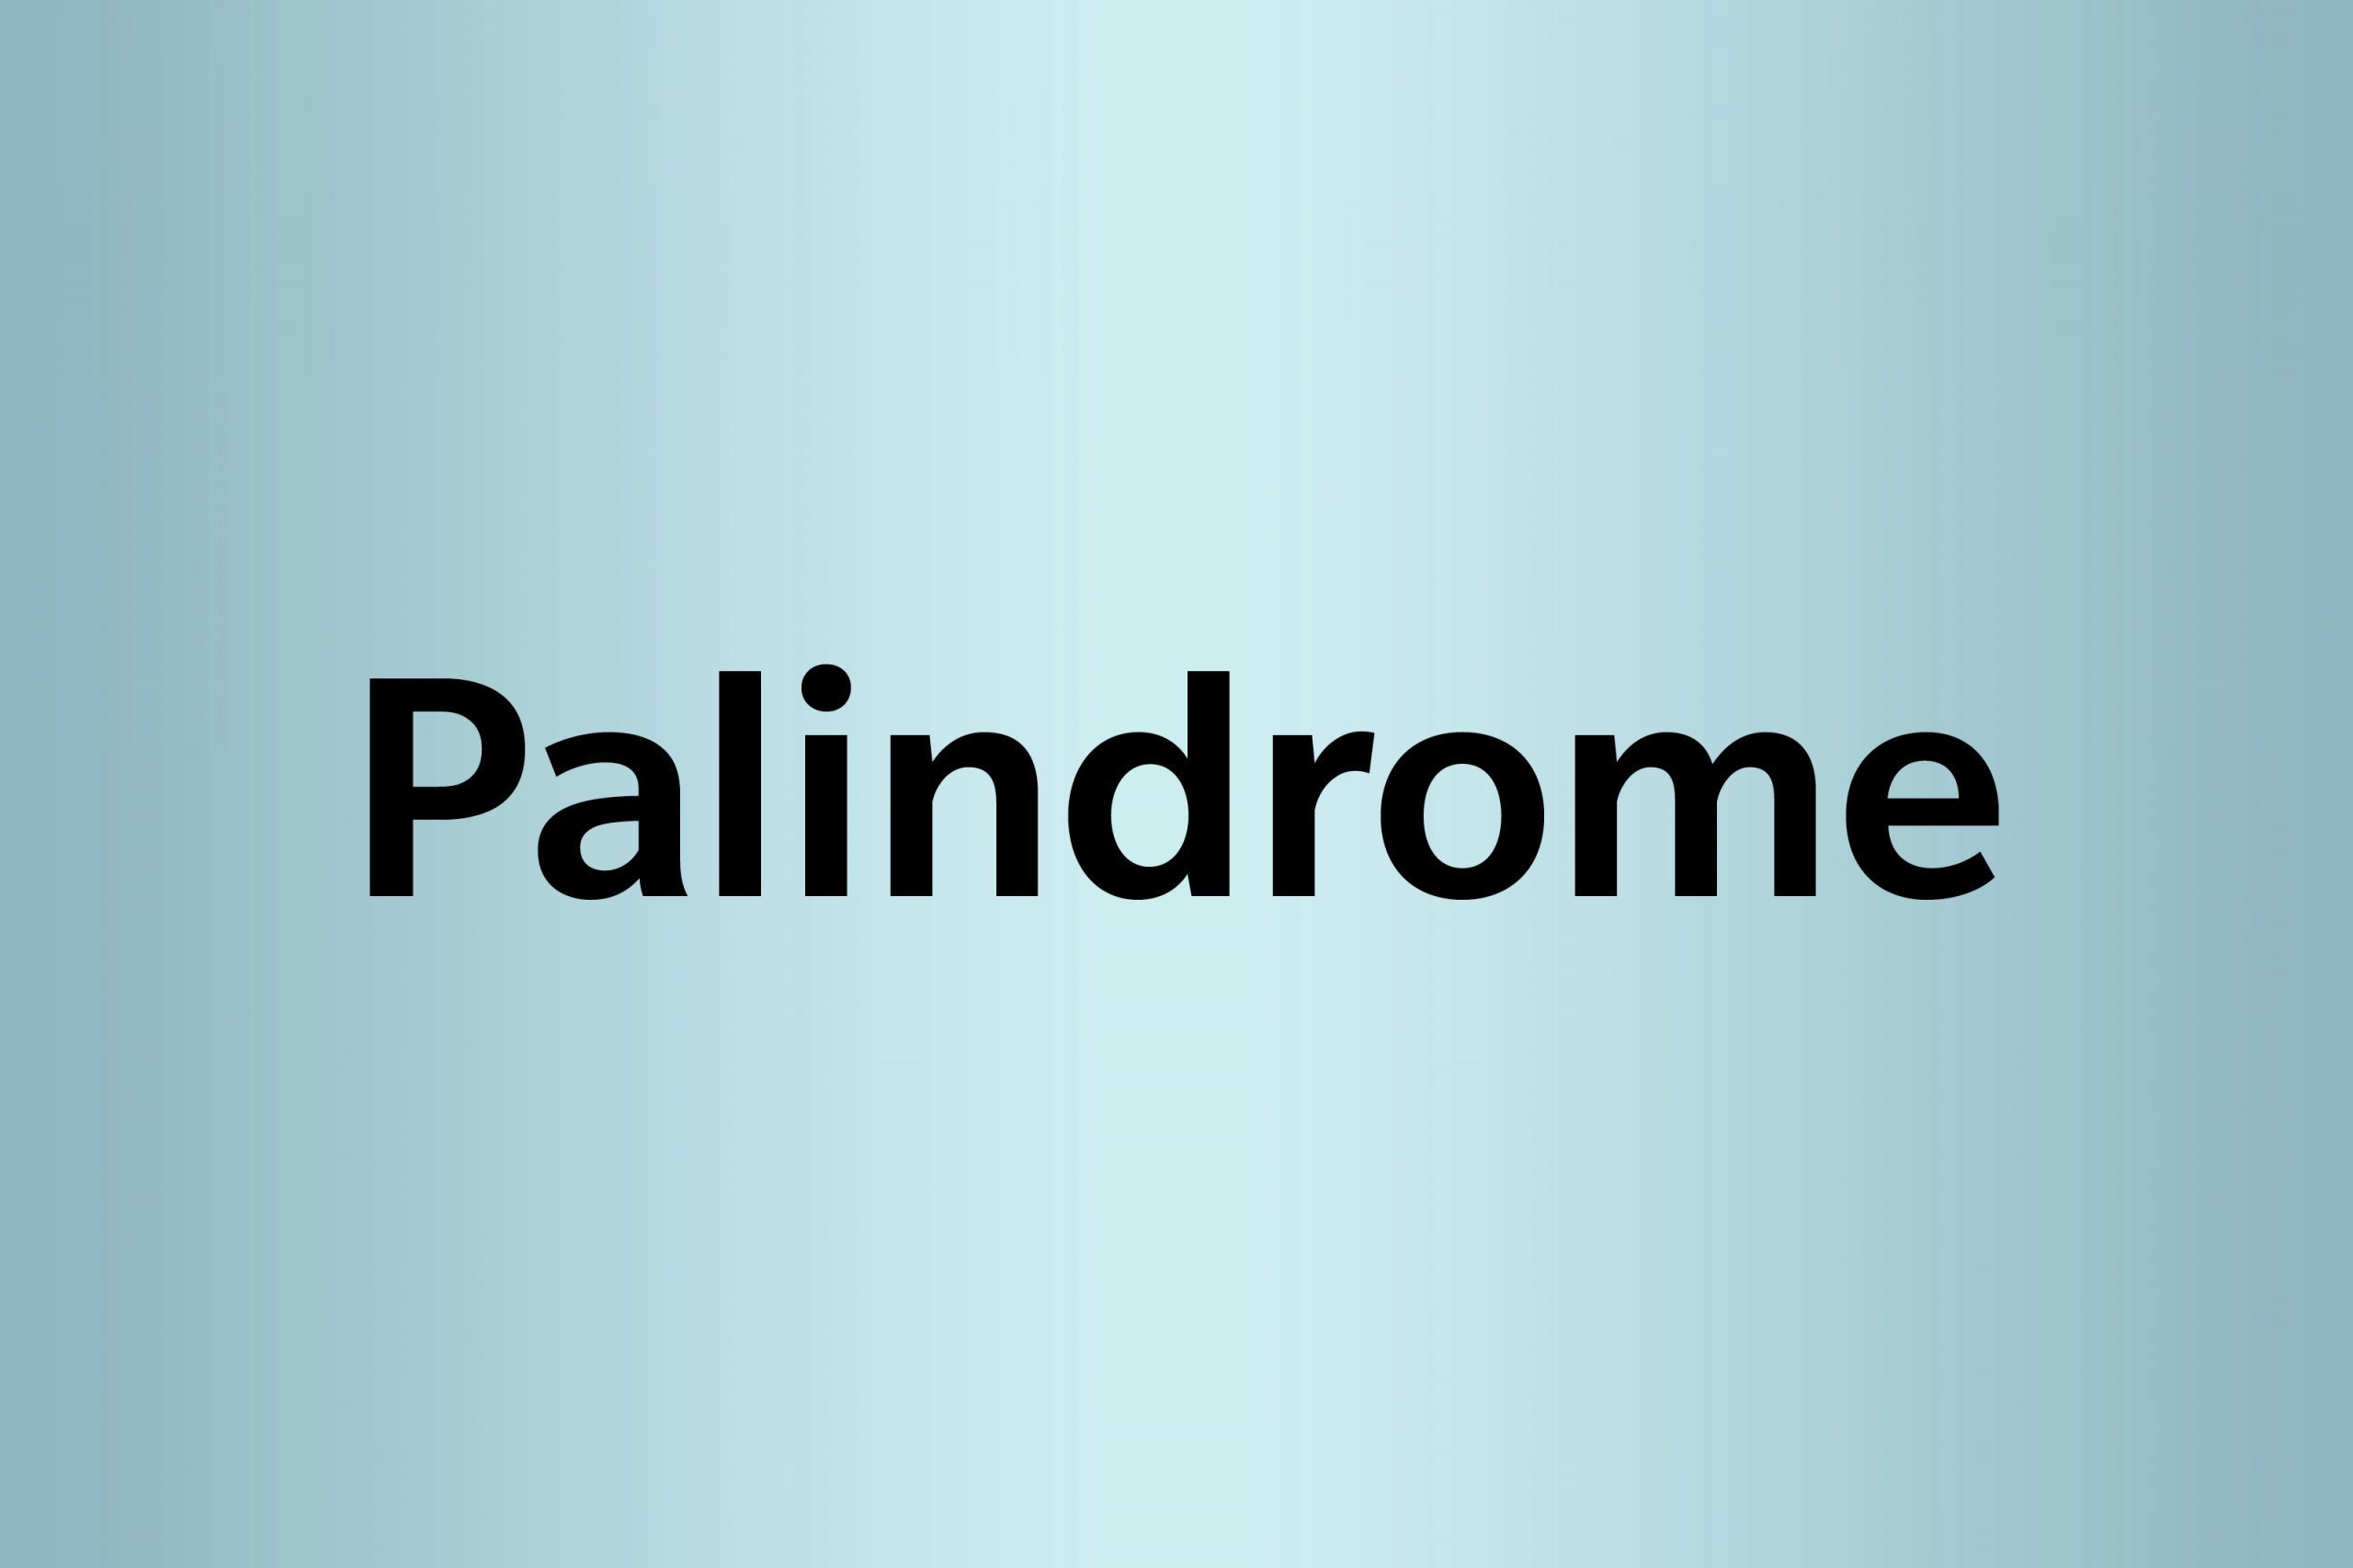 Paindromes8